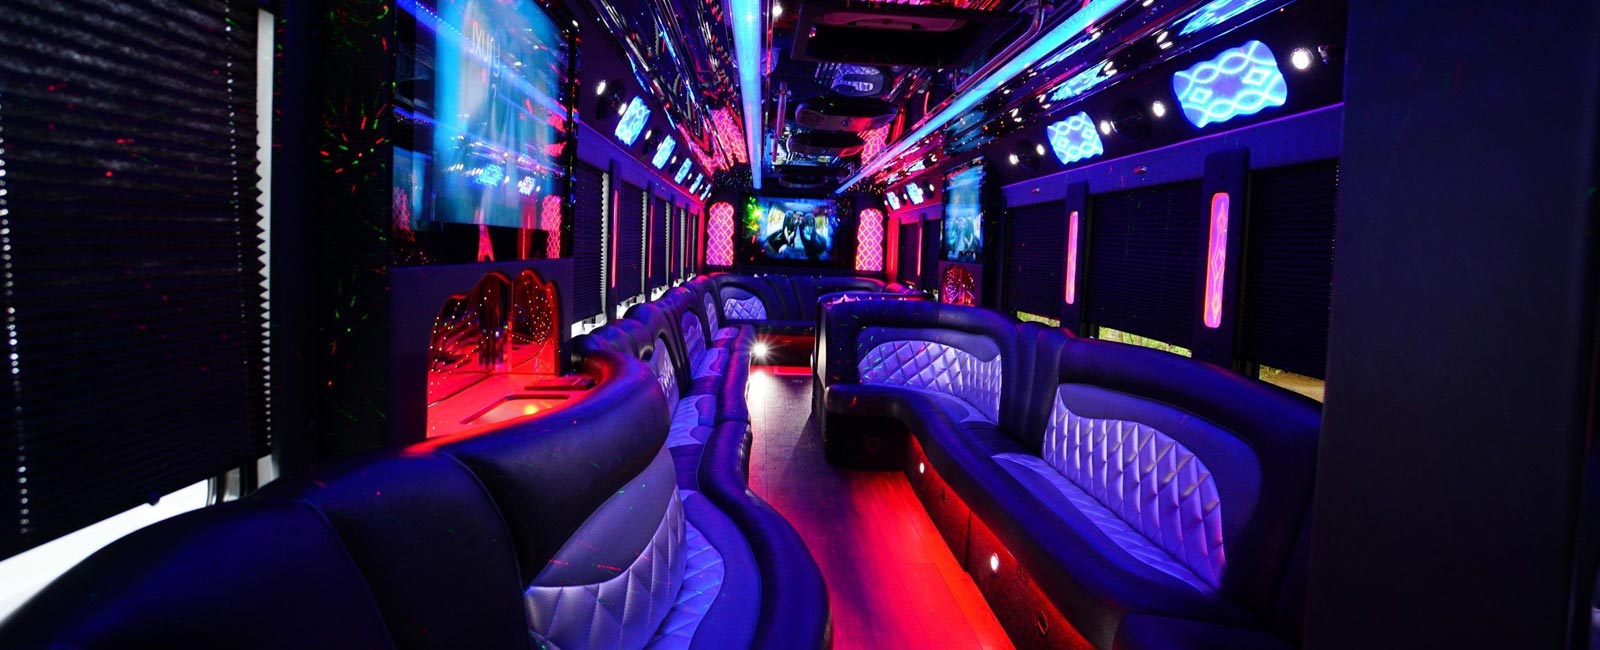 Extreme Party Bus Conversion Interior